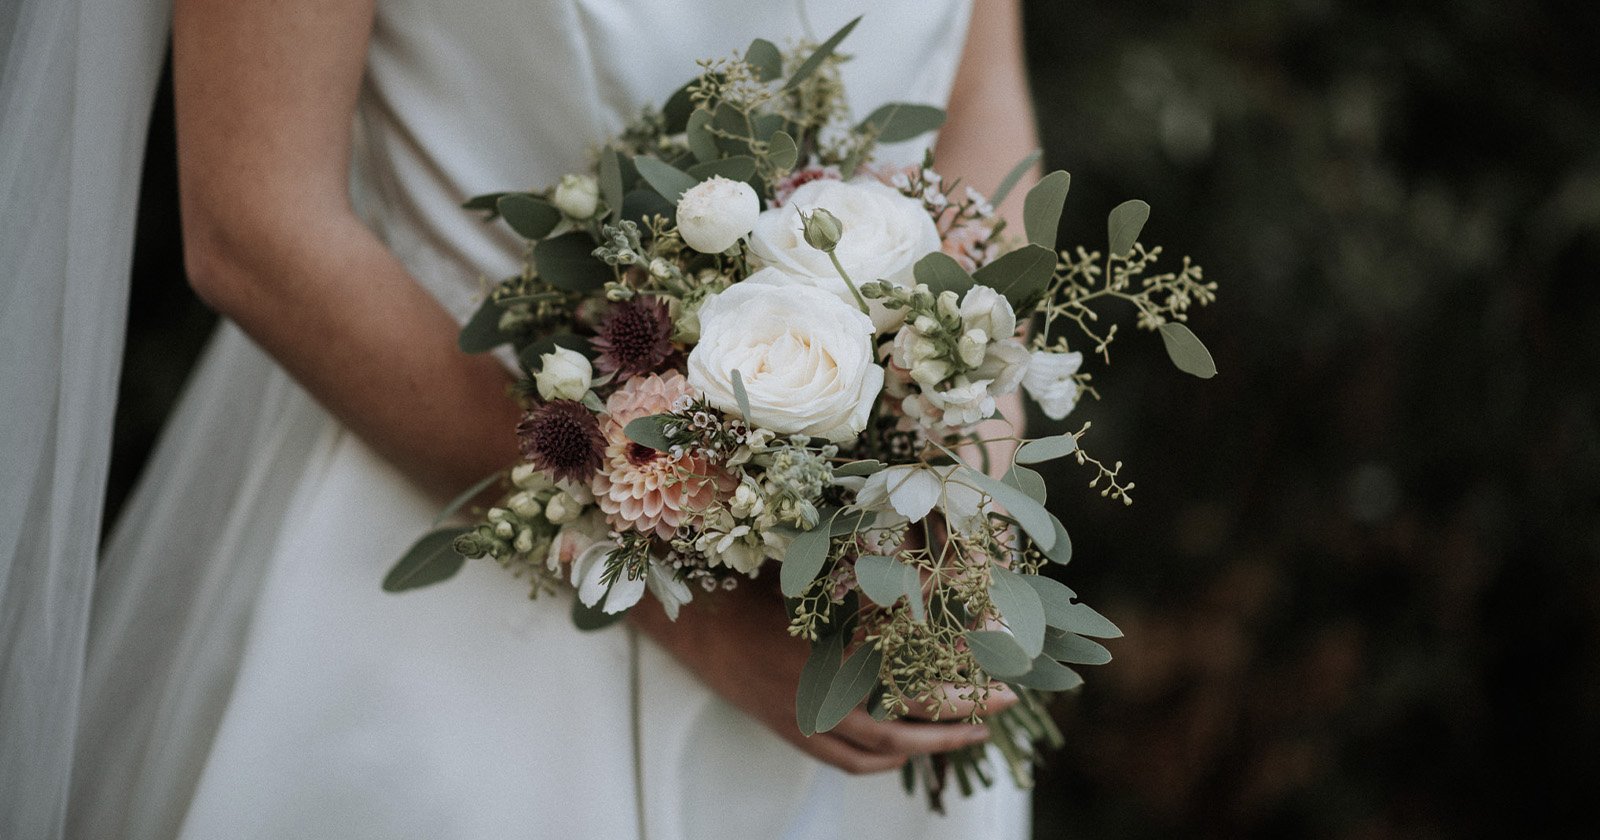 A bride holding a flower bouquet